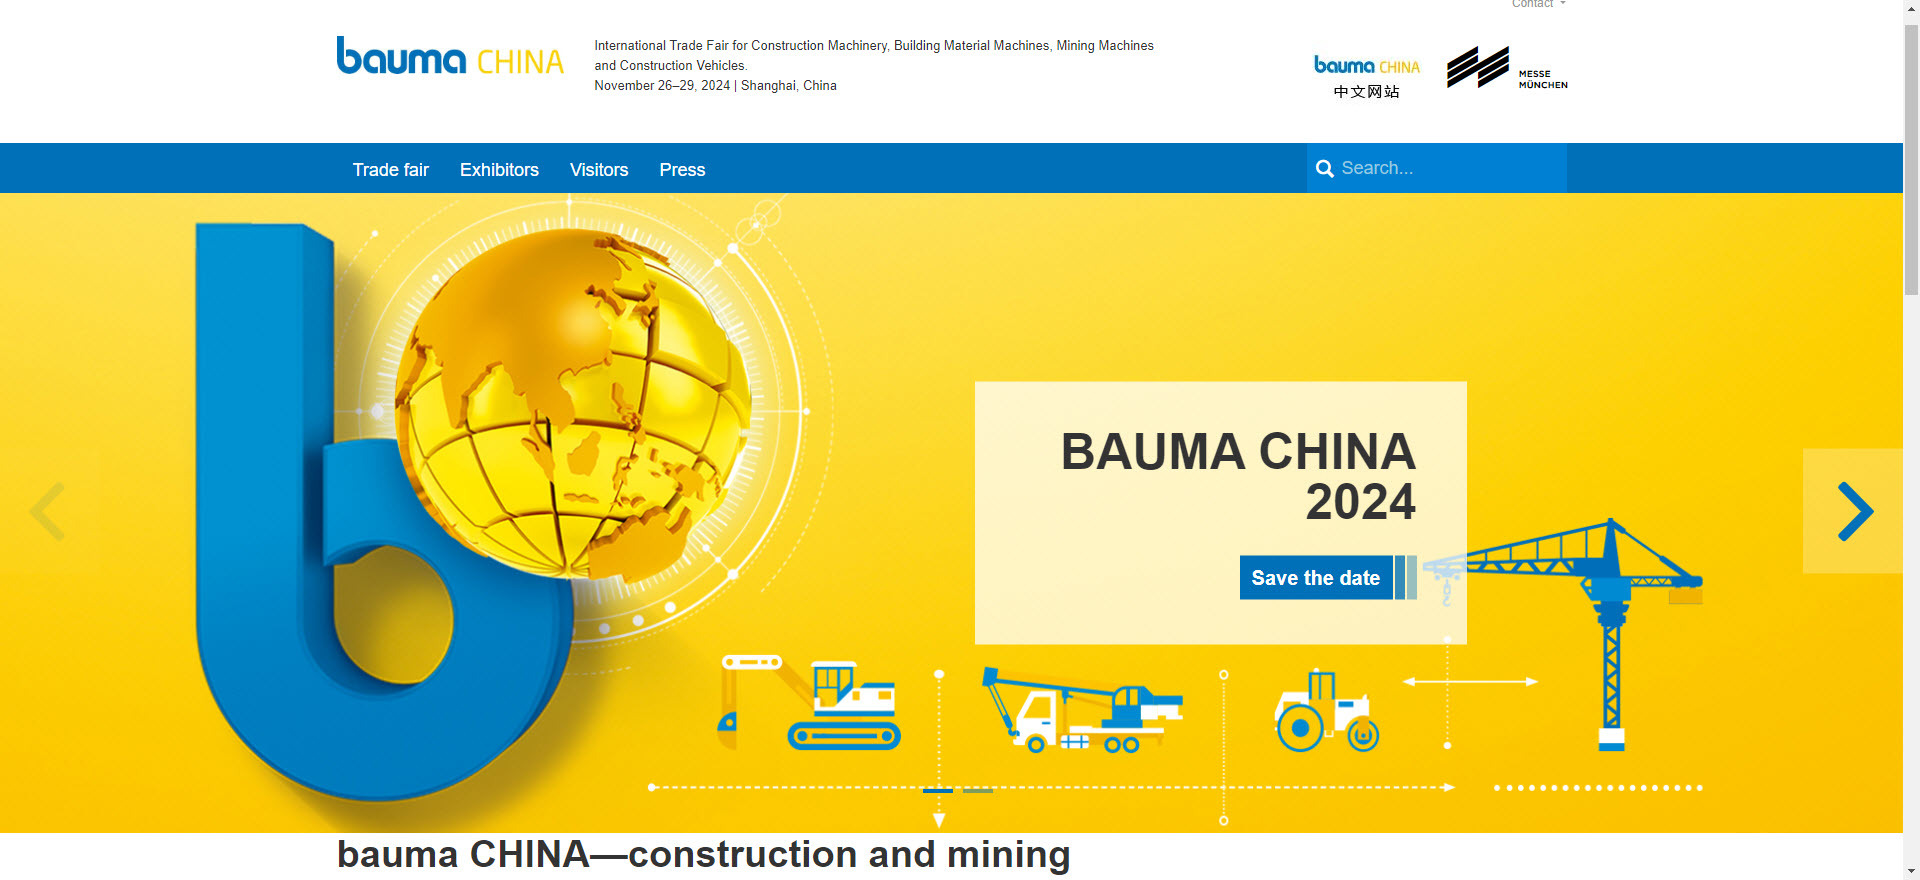 Bauma China Website Homepage